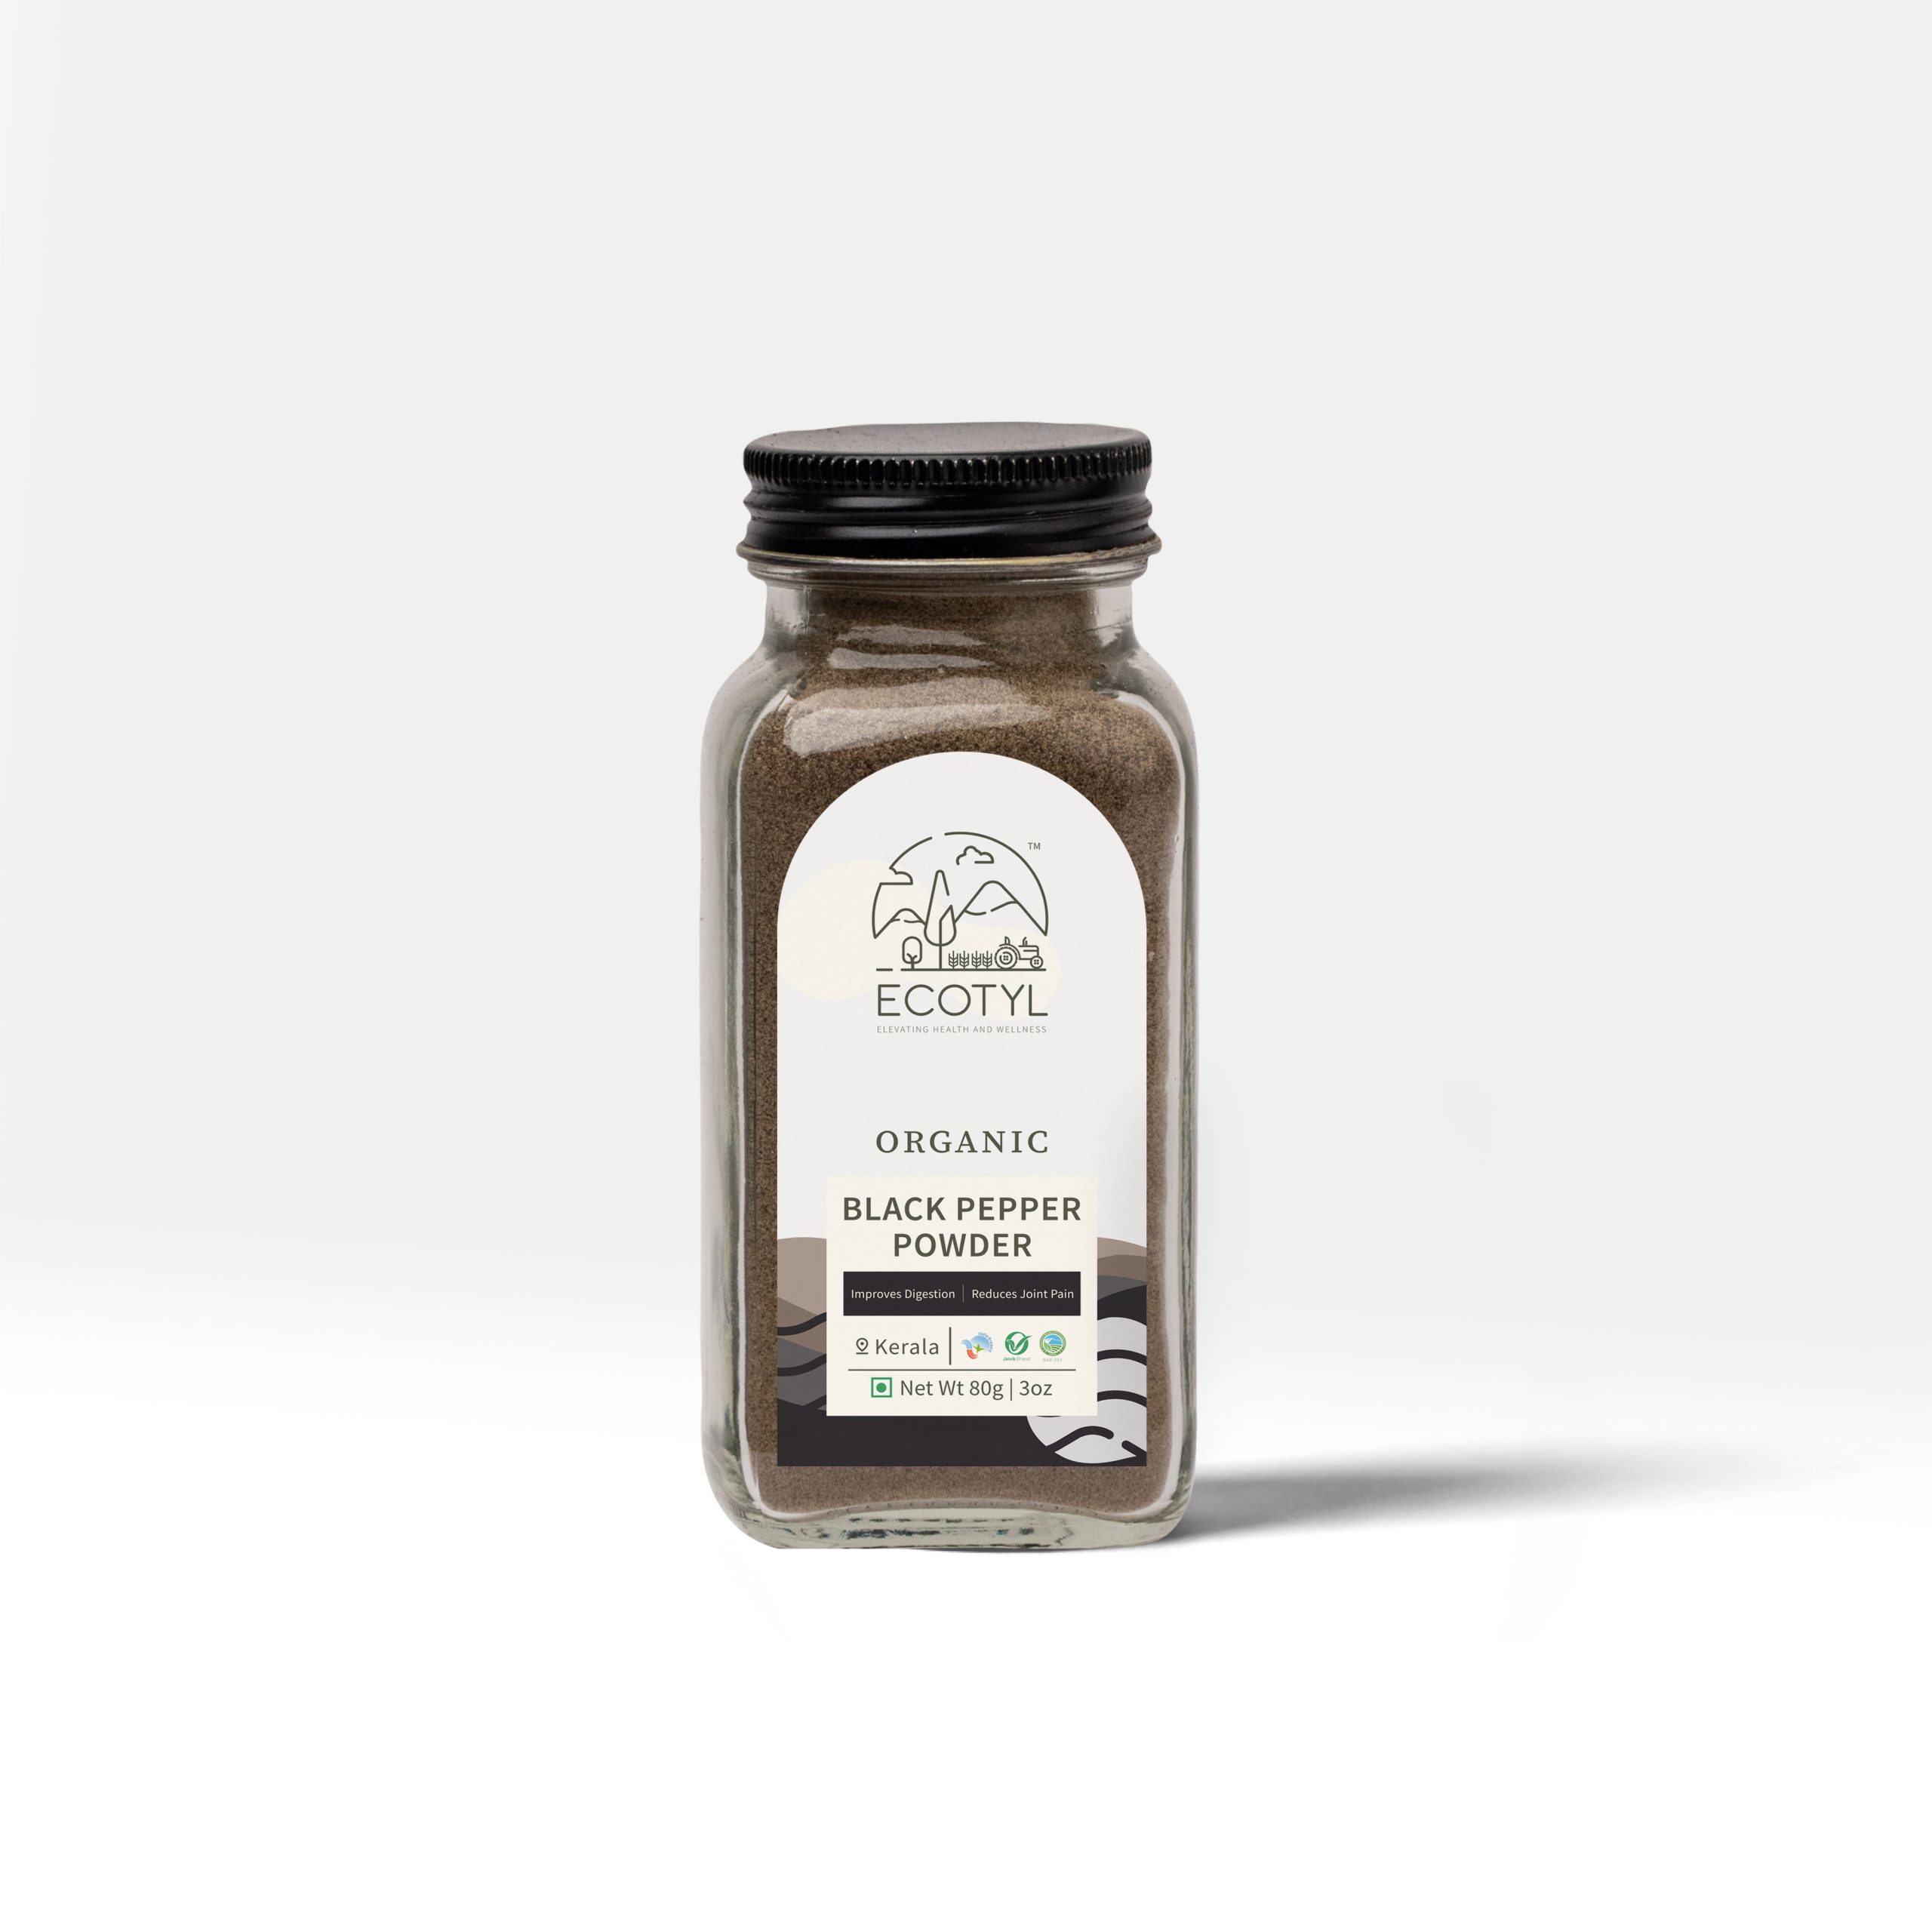 Product: Ecotyl Organic Black Pepper Powder – 80 g